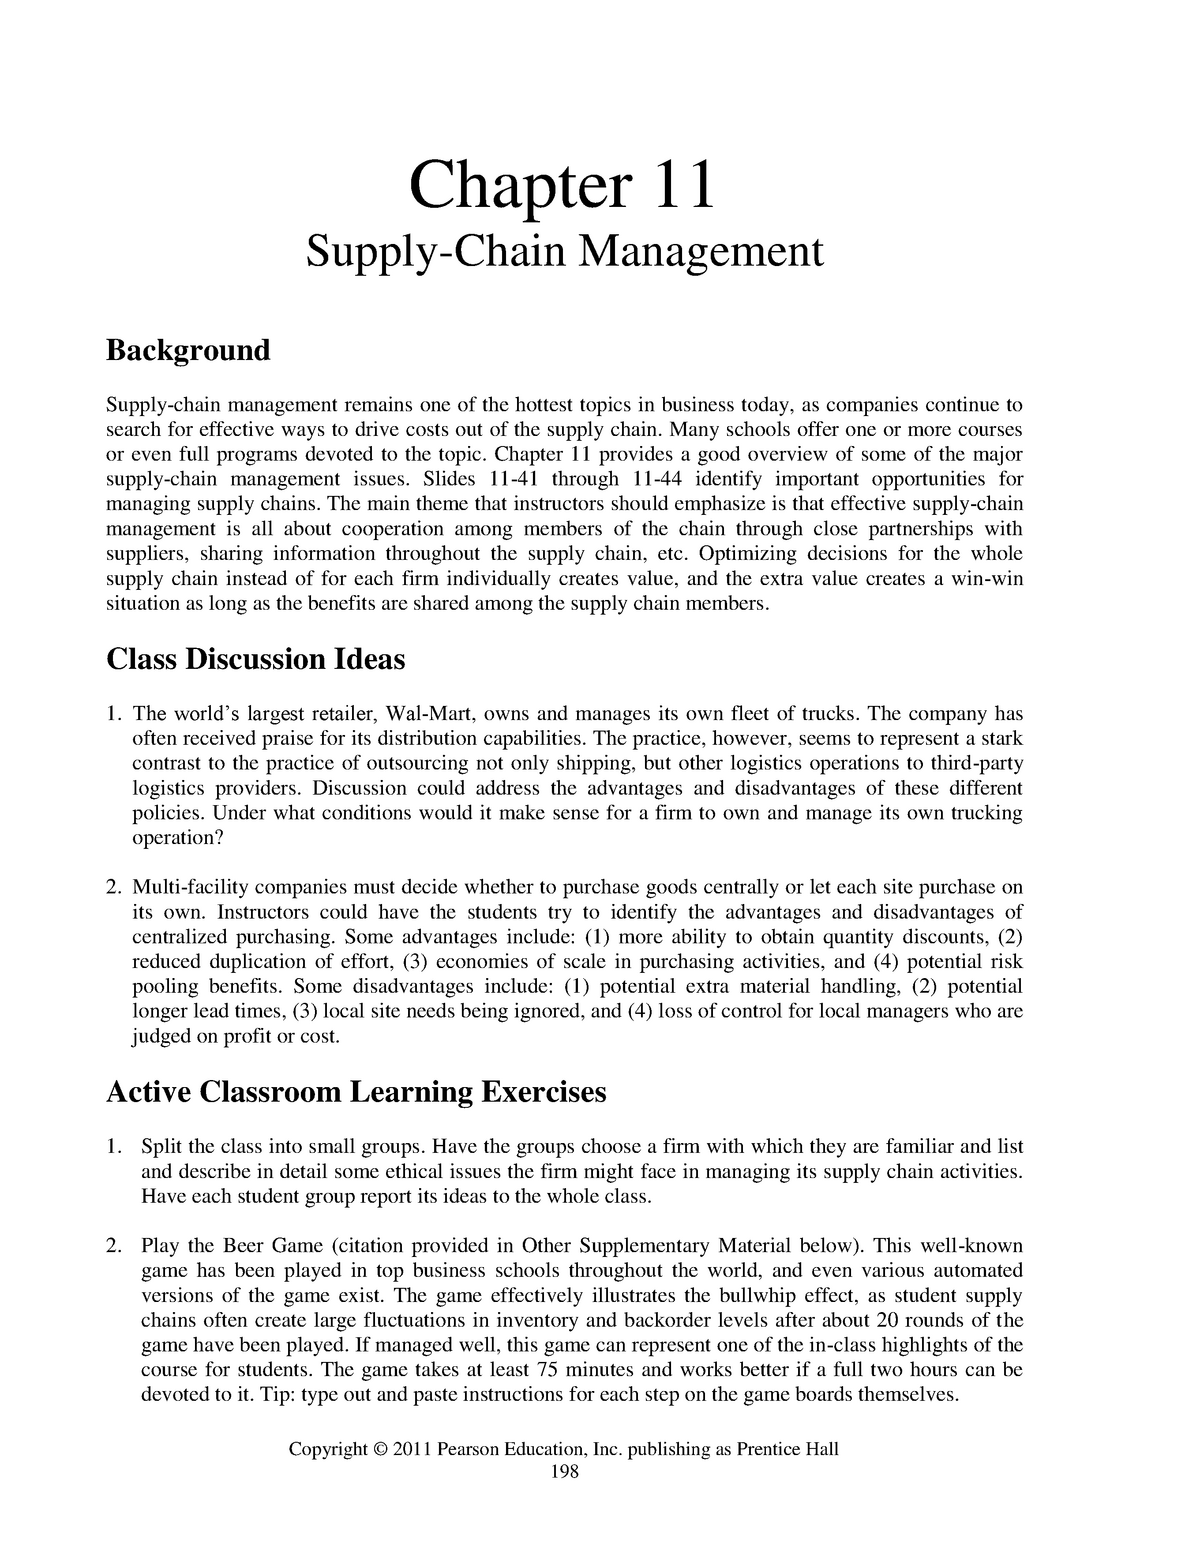 Heizer chapter 11 supply chain management StuDocu